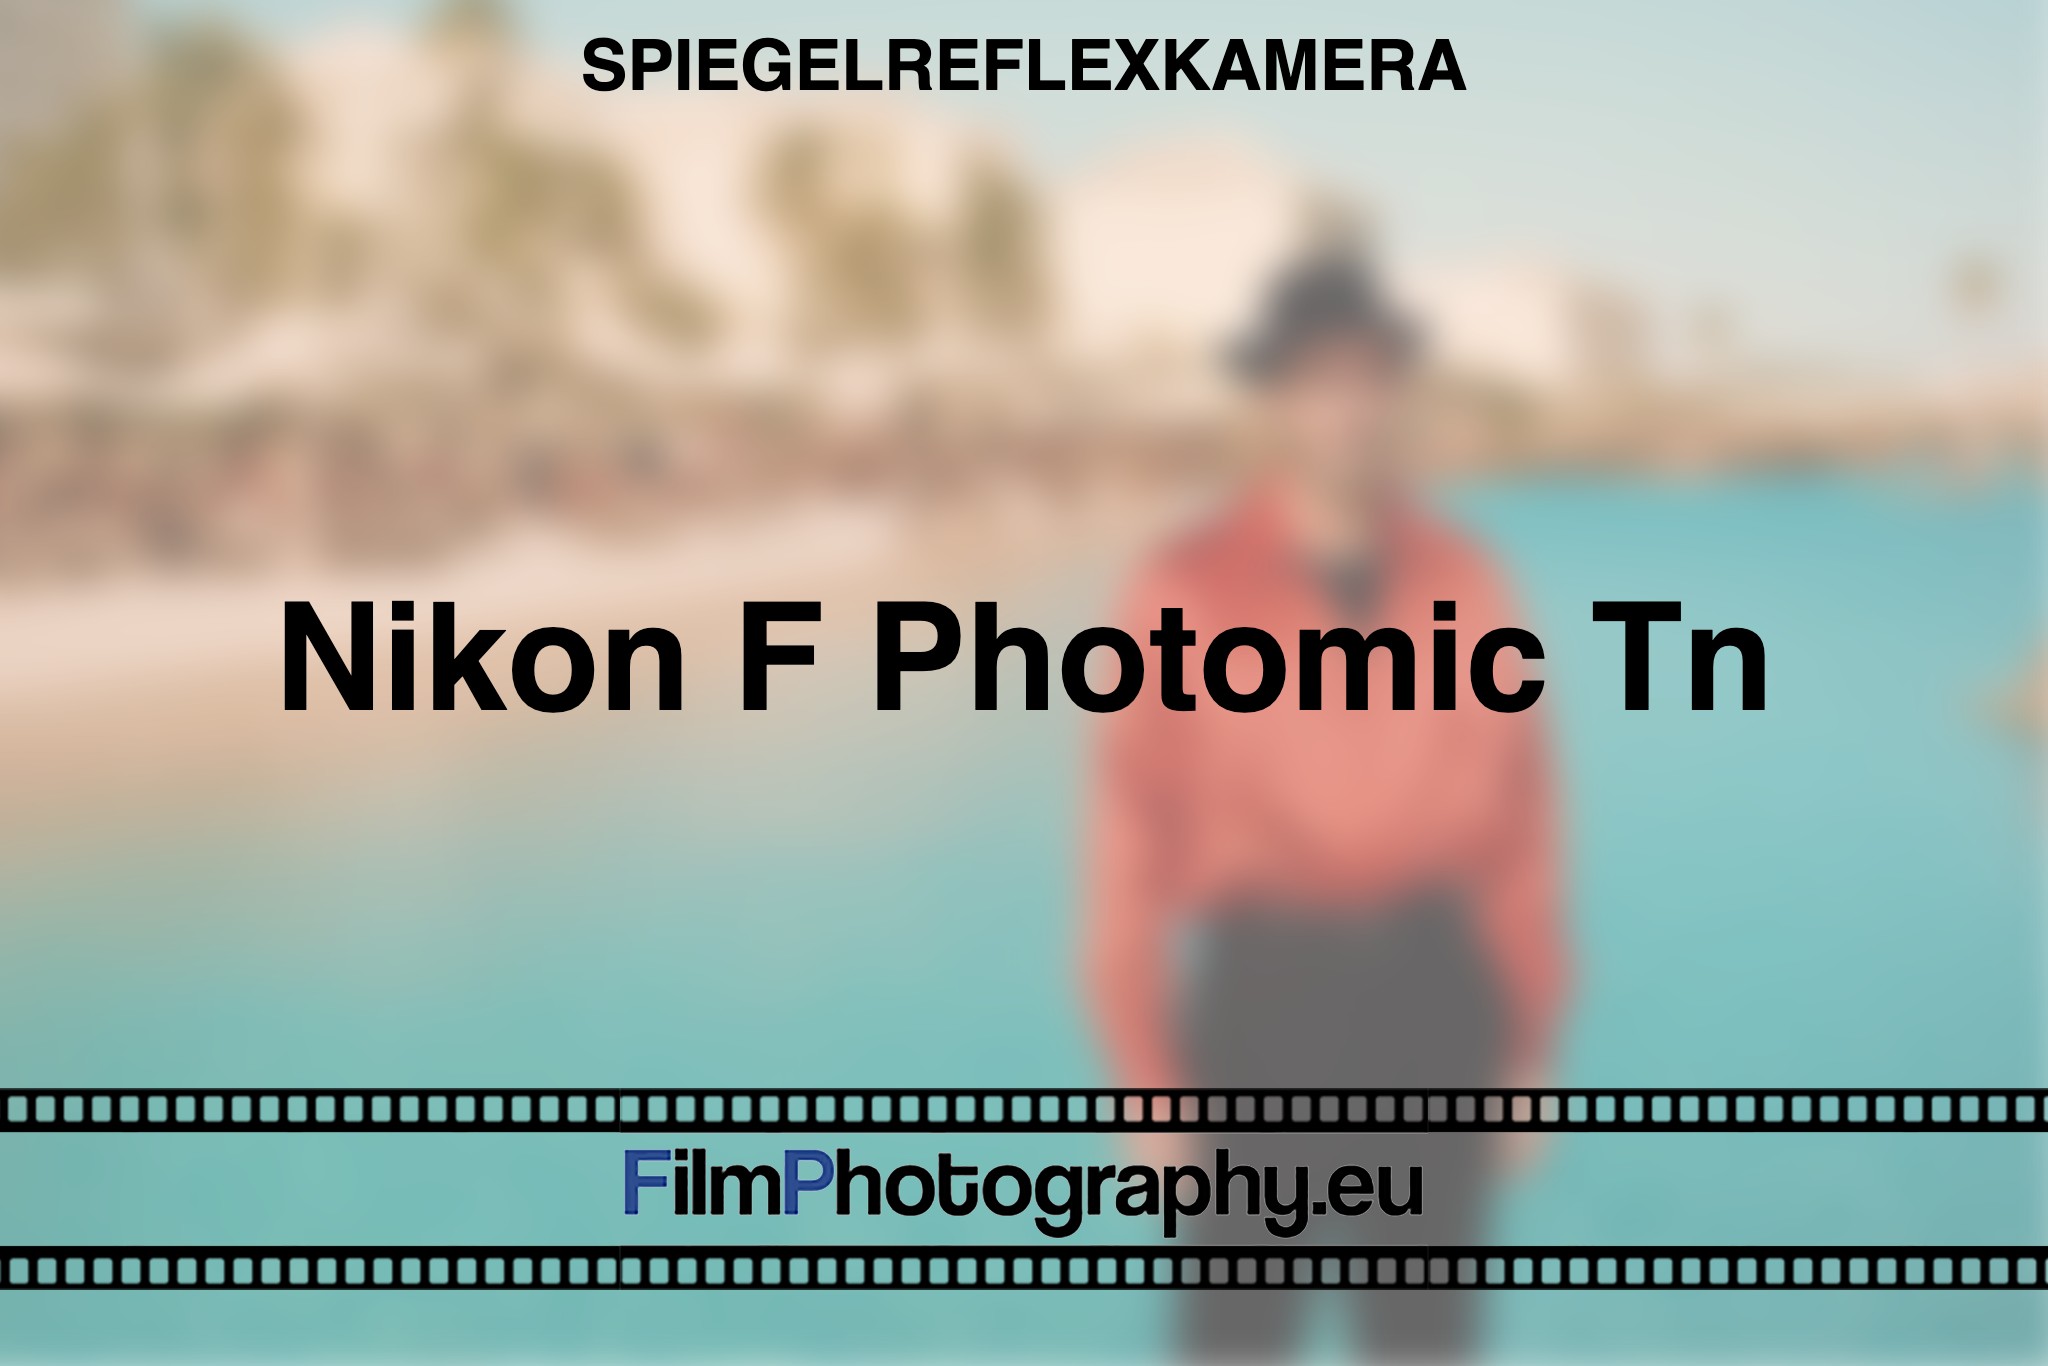 nikon-f-photomic-tn-spiegelreflexkamera-bnv